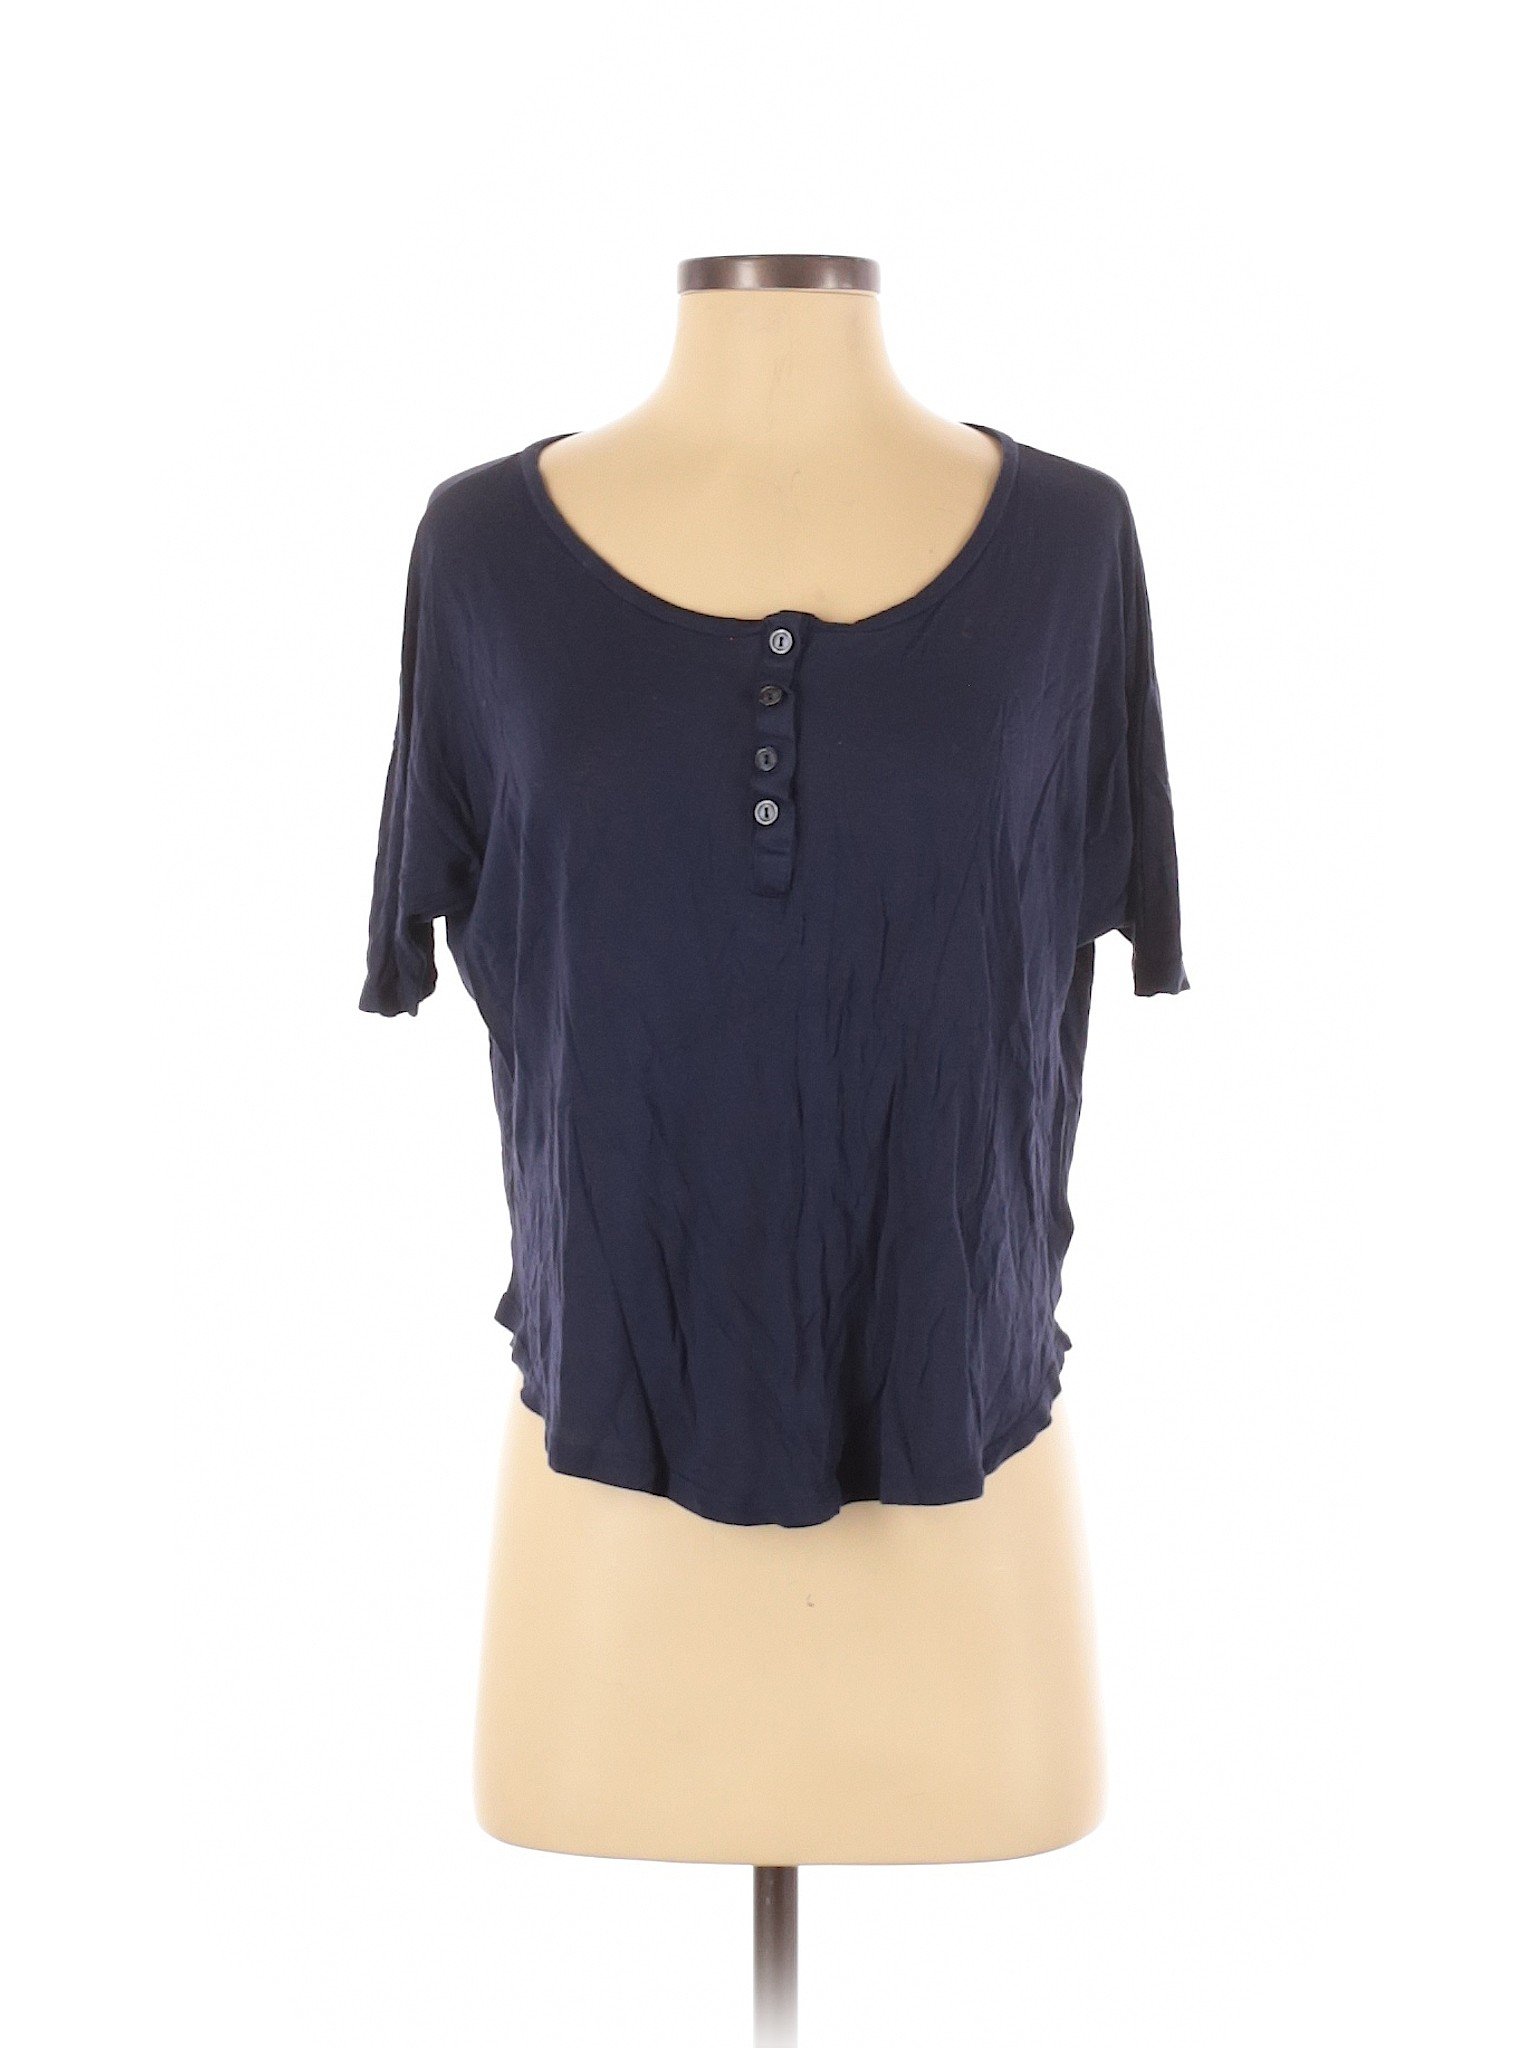 Zenana Outfitters Women Blue Short Sleeve Henley S | eBay